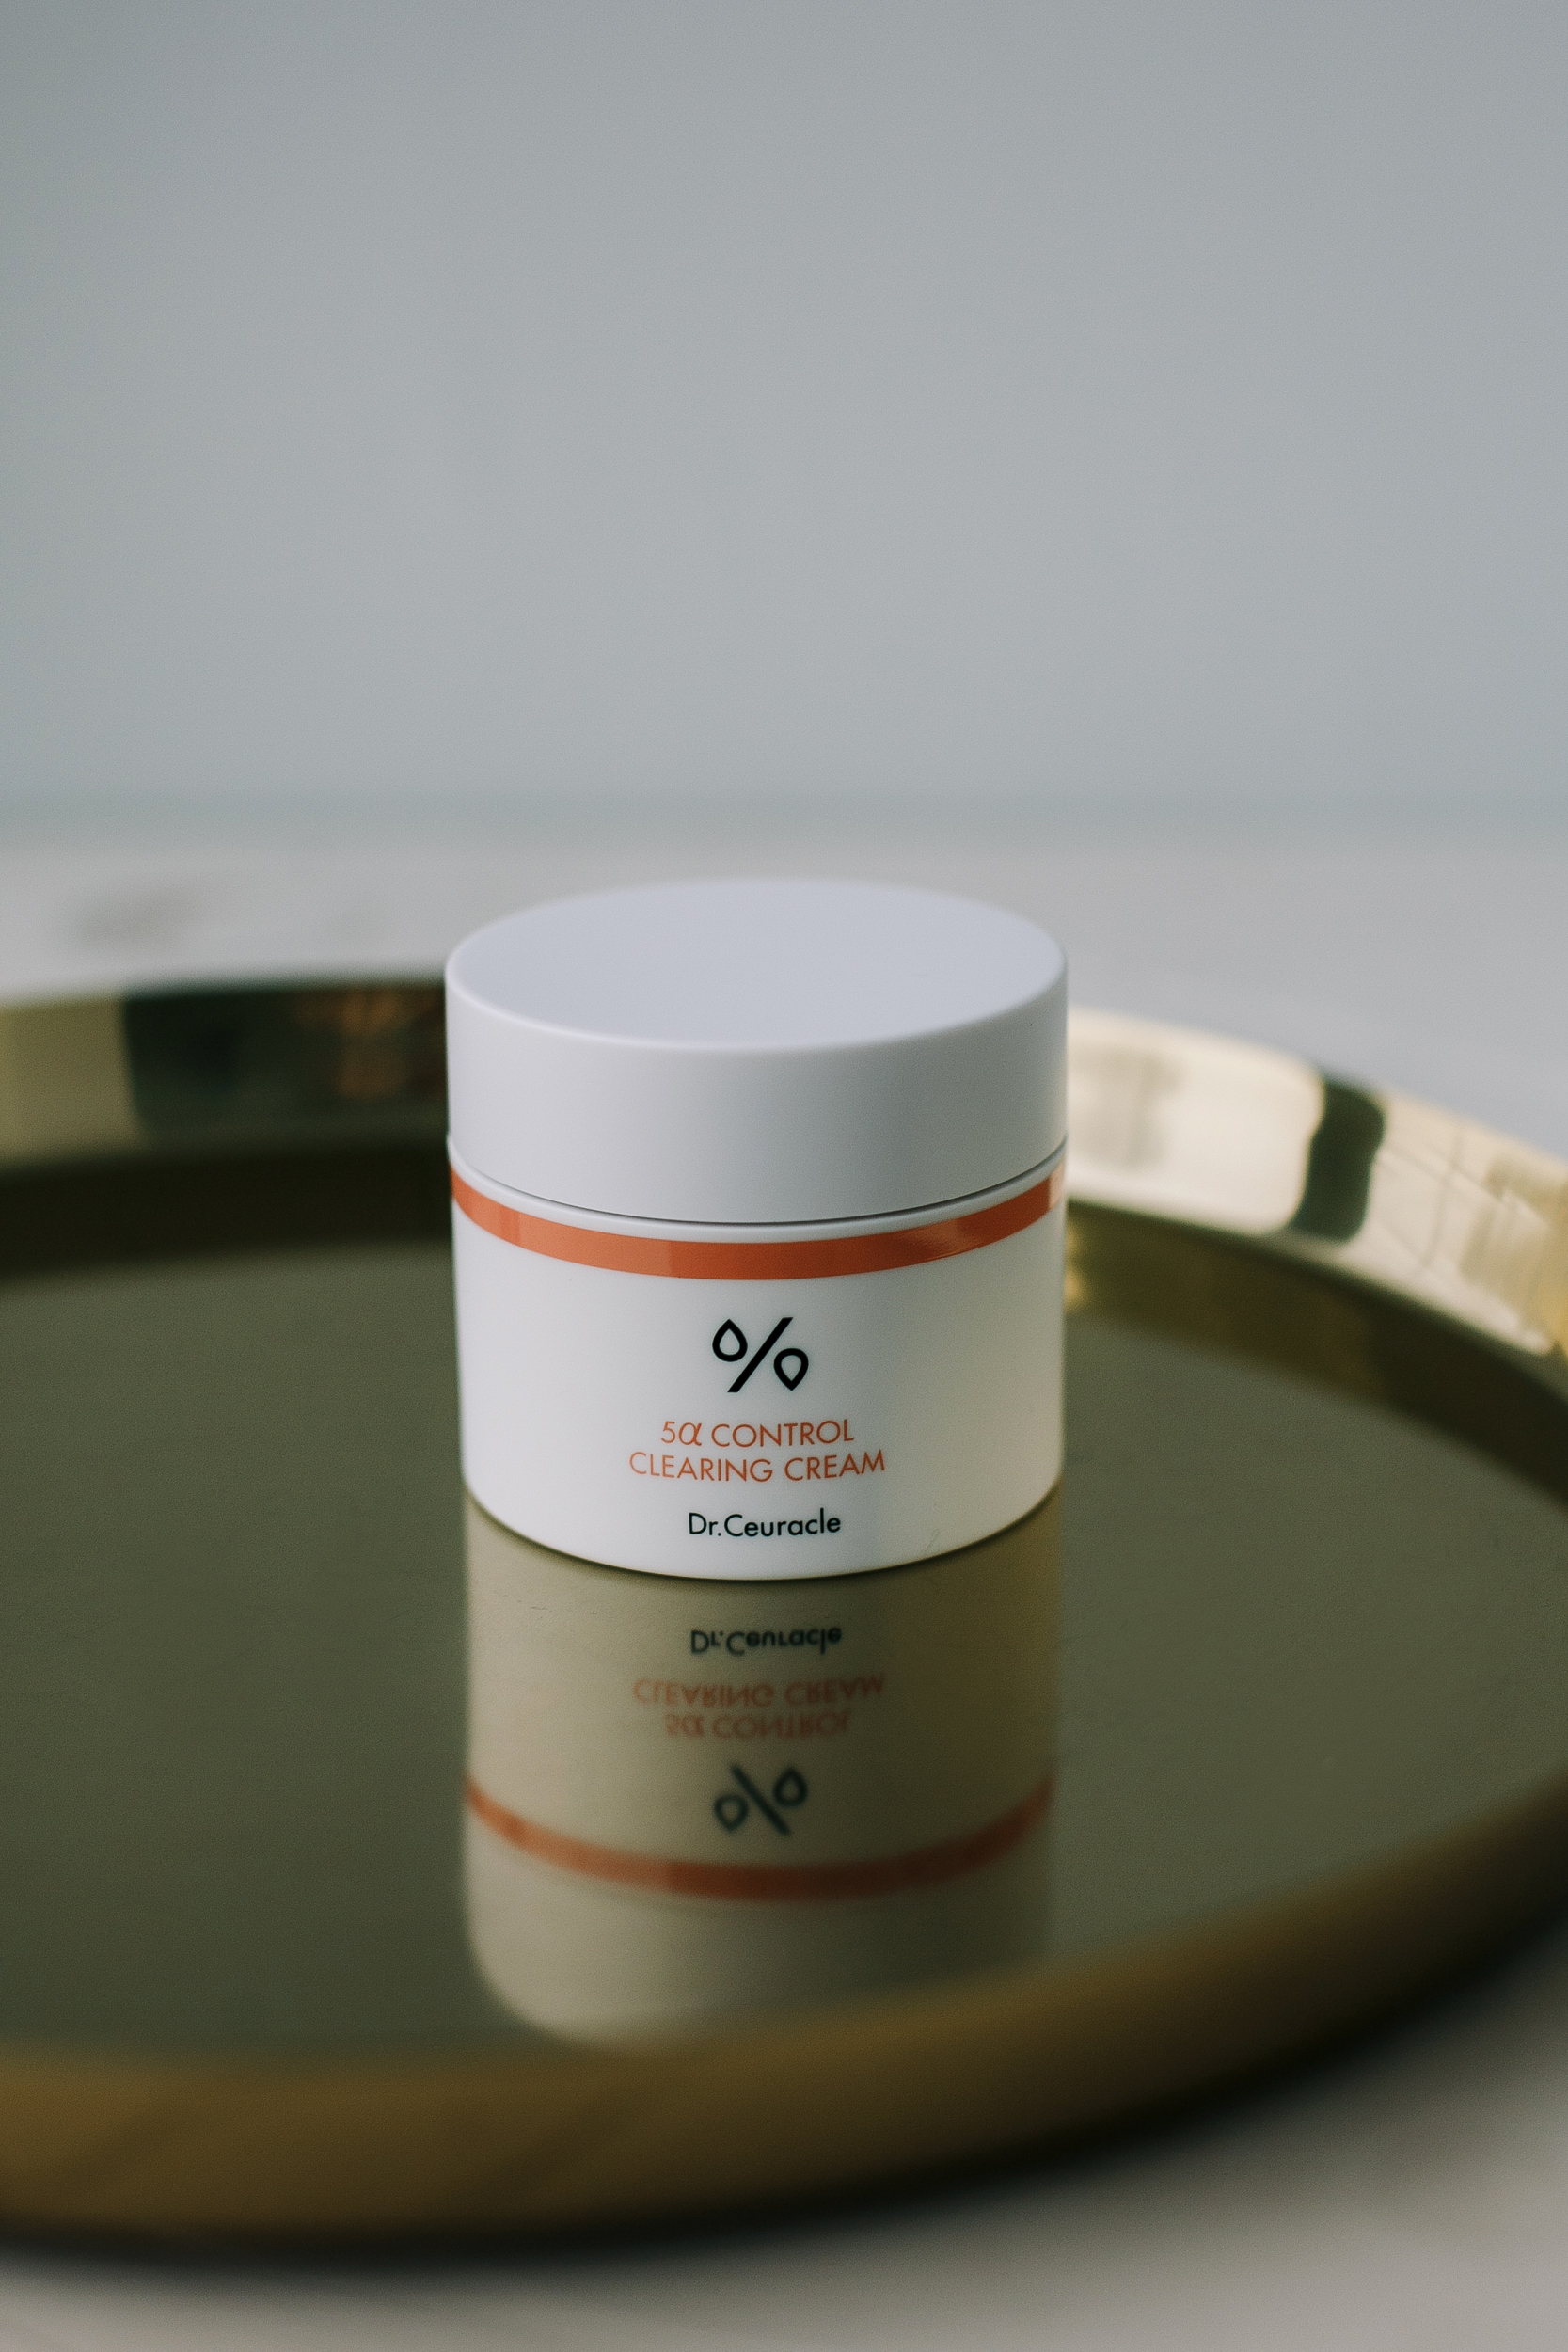 BU// Себорегулирующий крем для проблемной кожи Dr. Ceuracle 5α Control Clearing Cream 50g